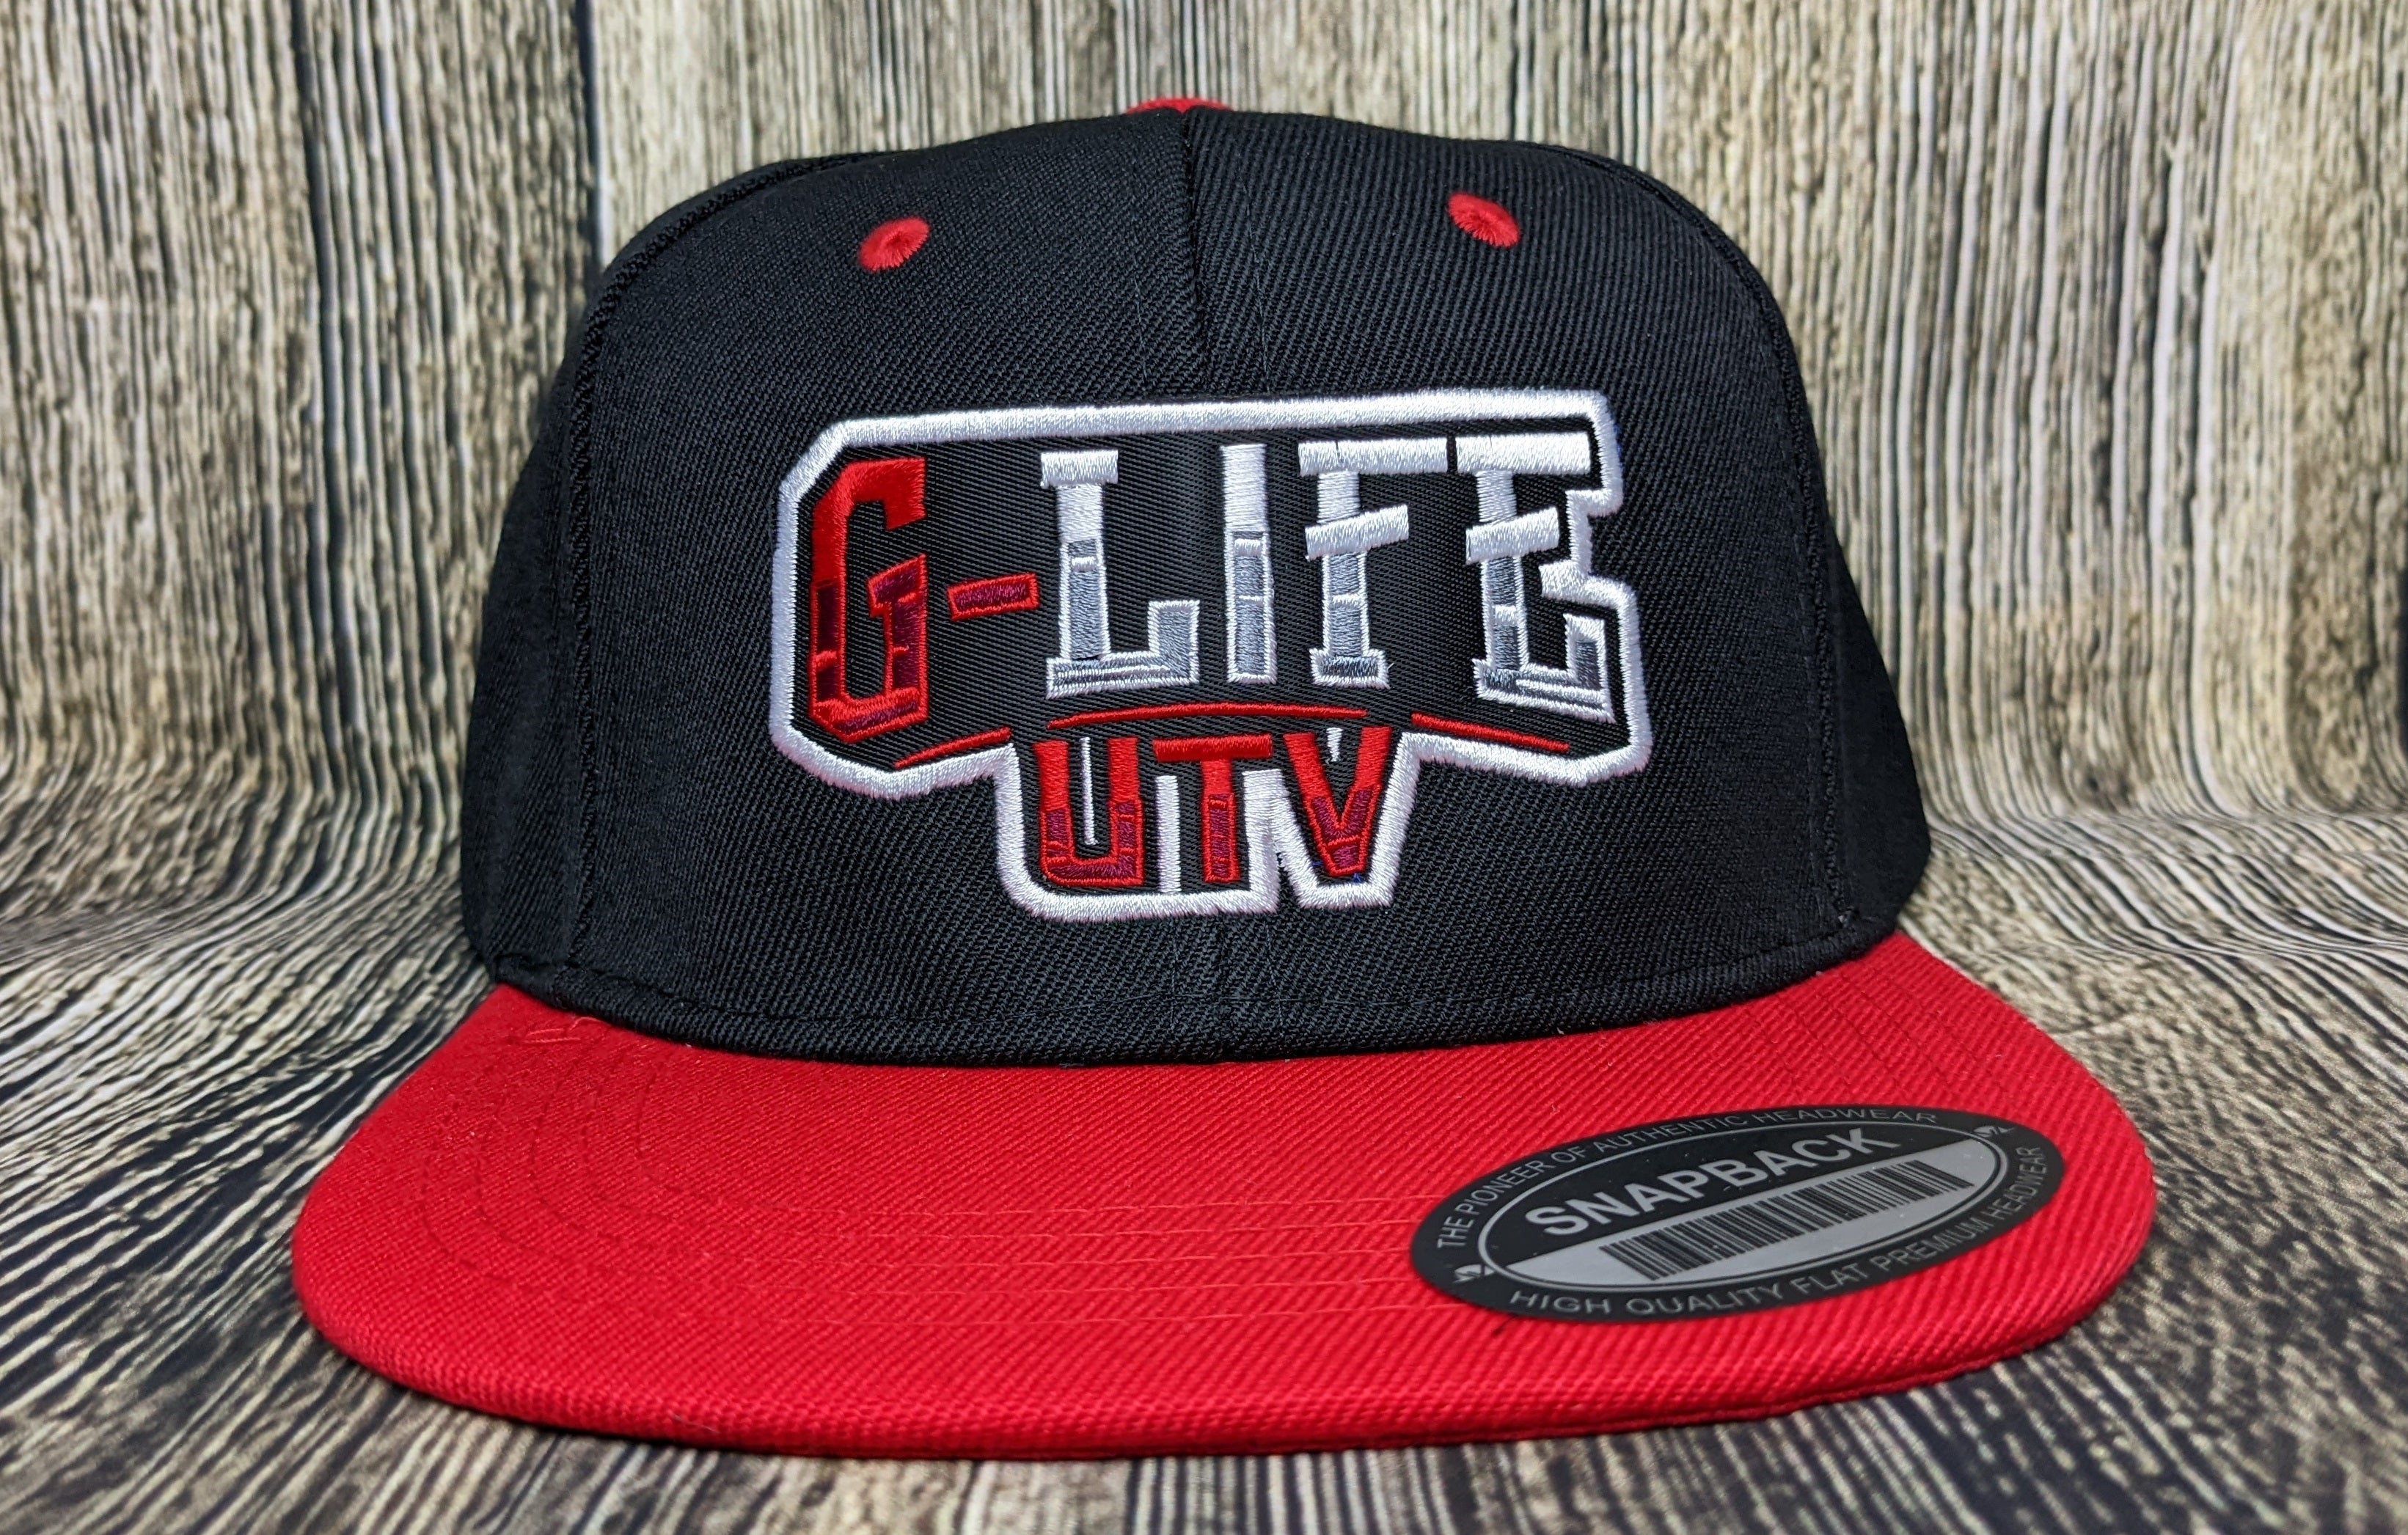 G Life UTV - Black/Red Snapback Hat